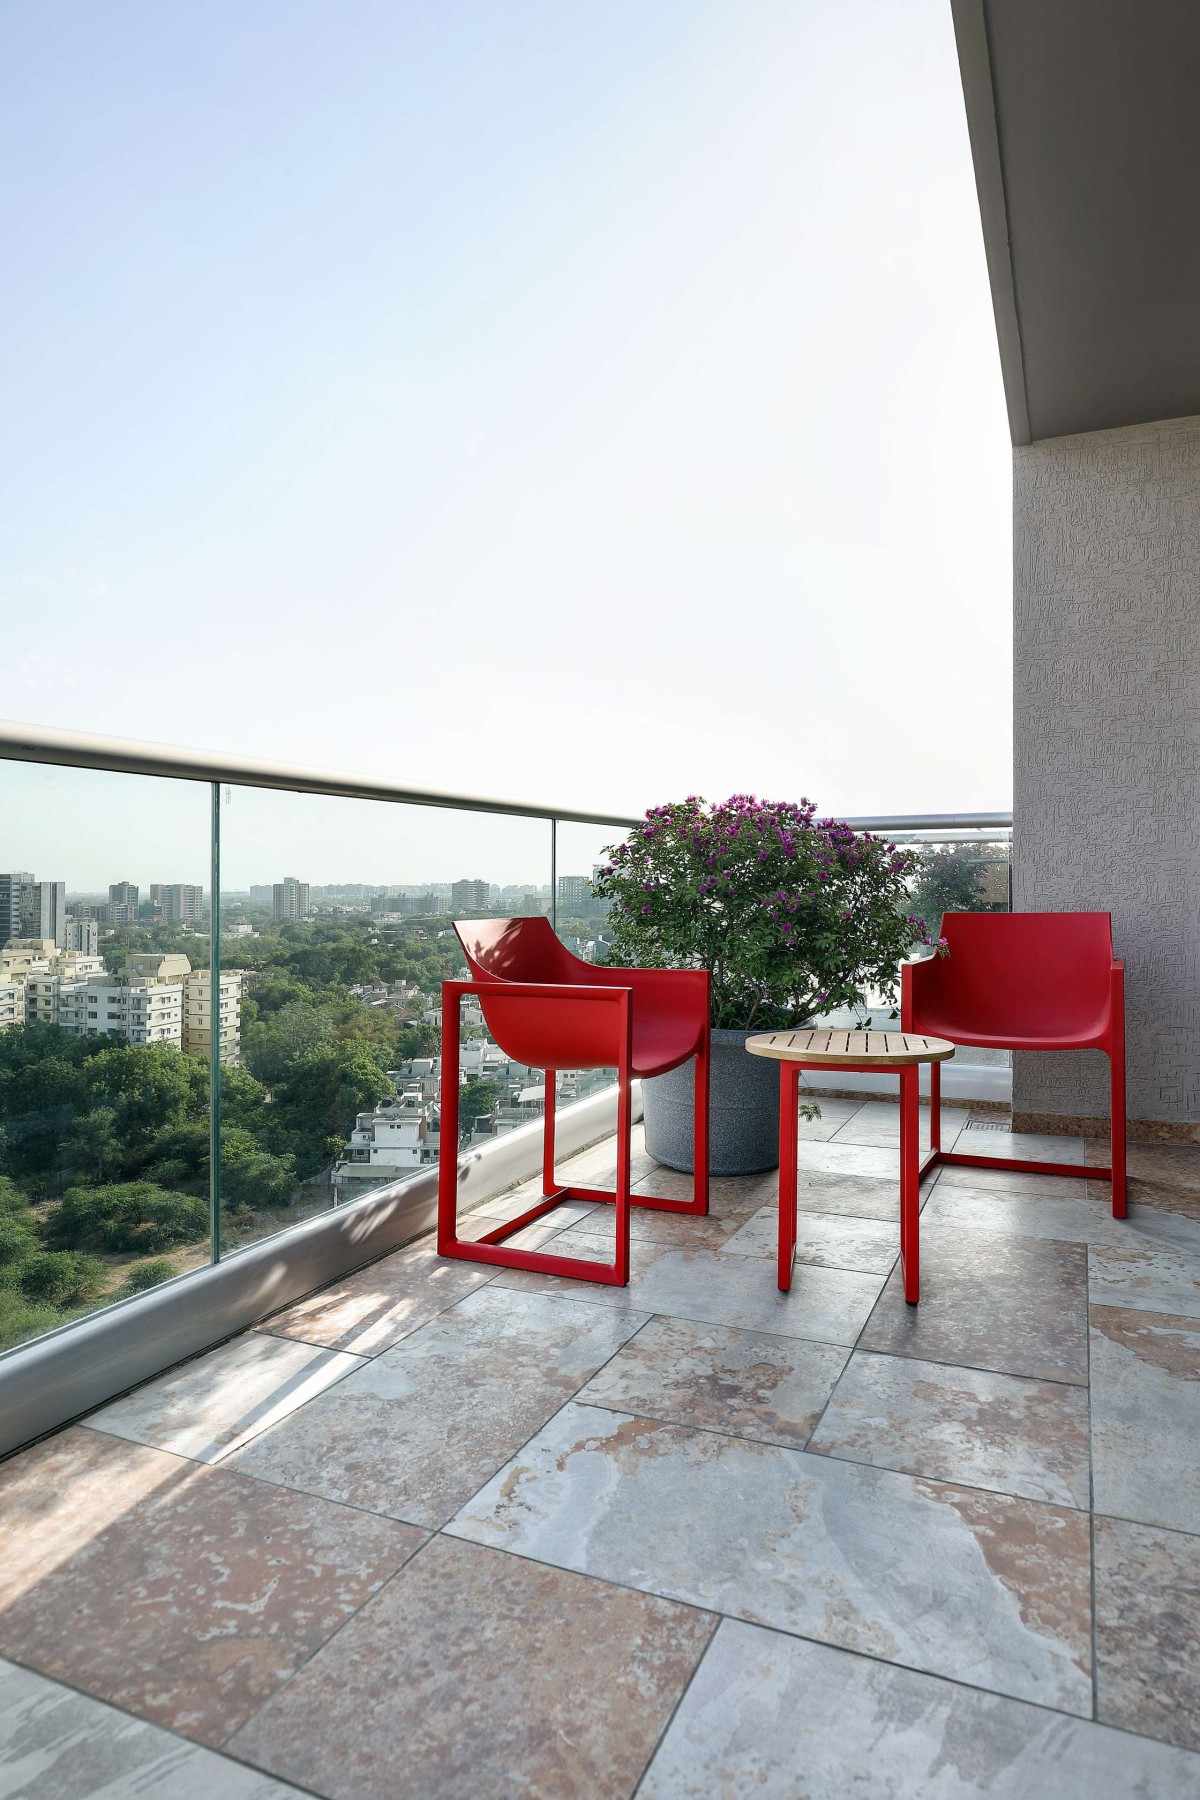 Balcony of Mansukh Rojiwadia’s Penthouse by Dipen Gada & Associates